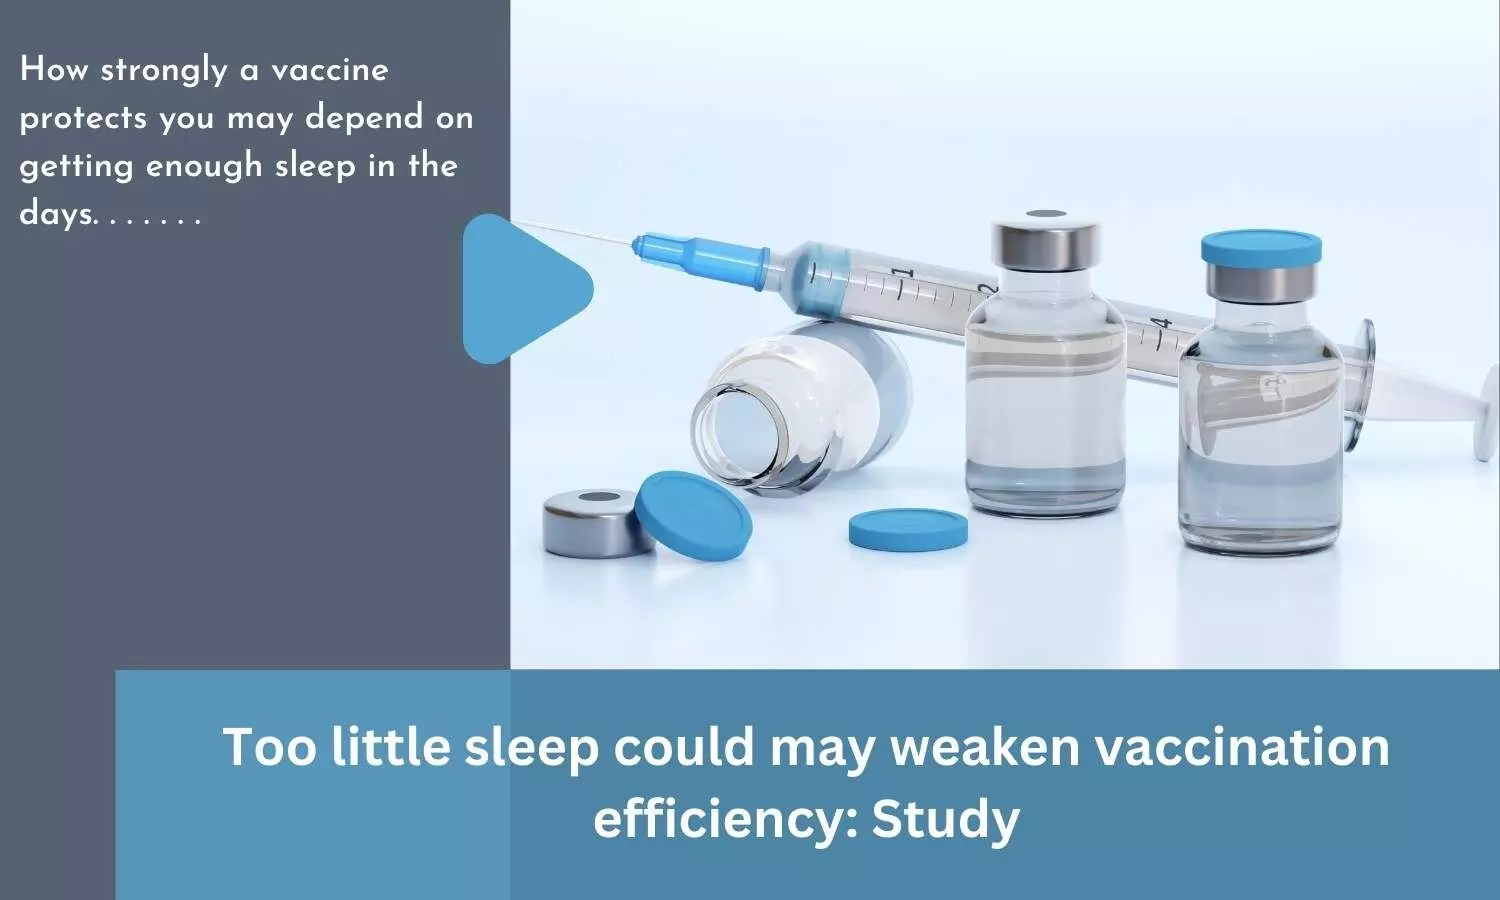 Too little sleep may weaken vaccination efficiency: Study